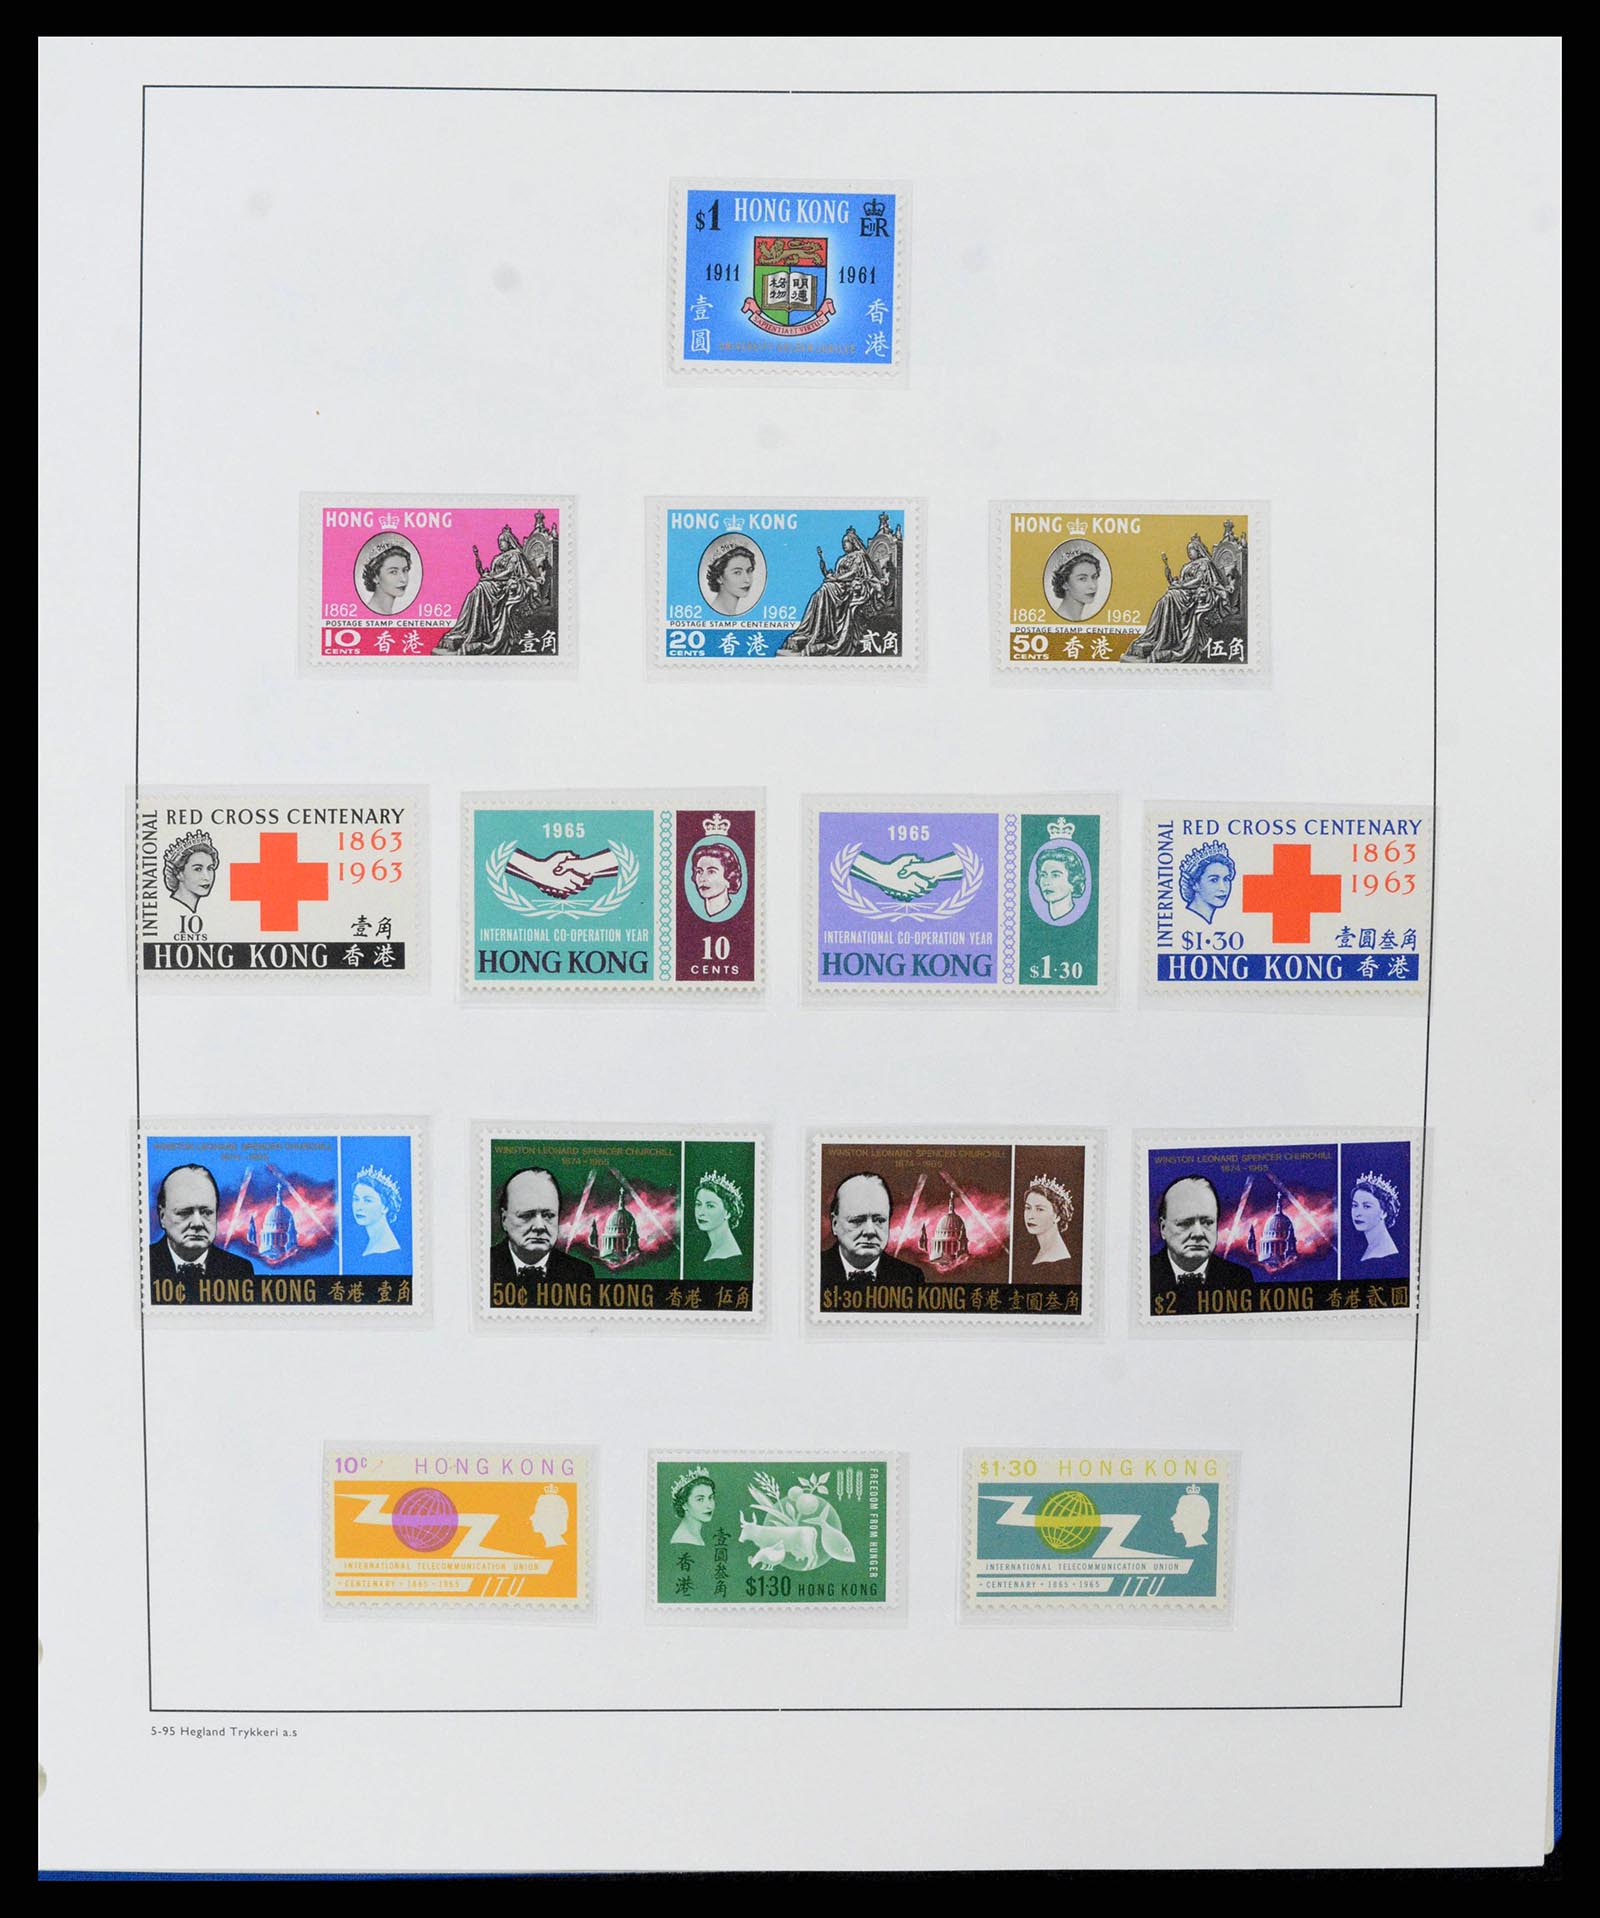 37955 0049 - Stamp collection 37955 Hong Kong supercollection 1862-2007.